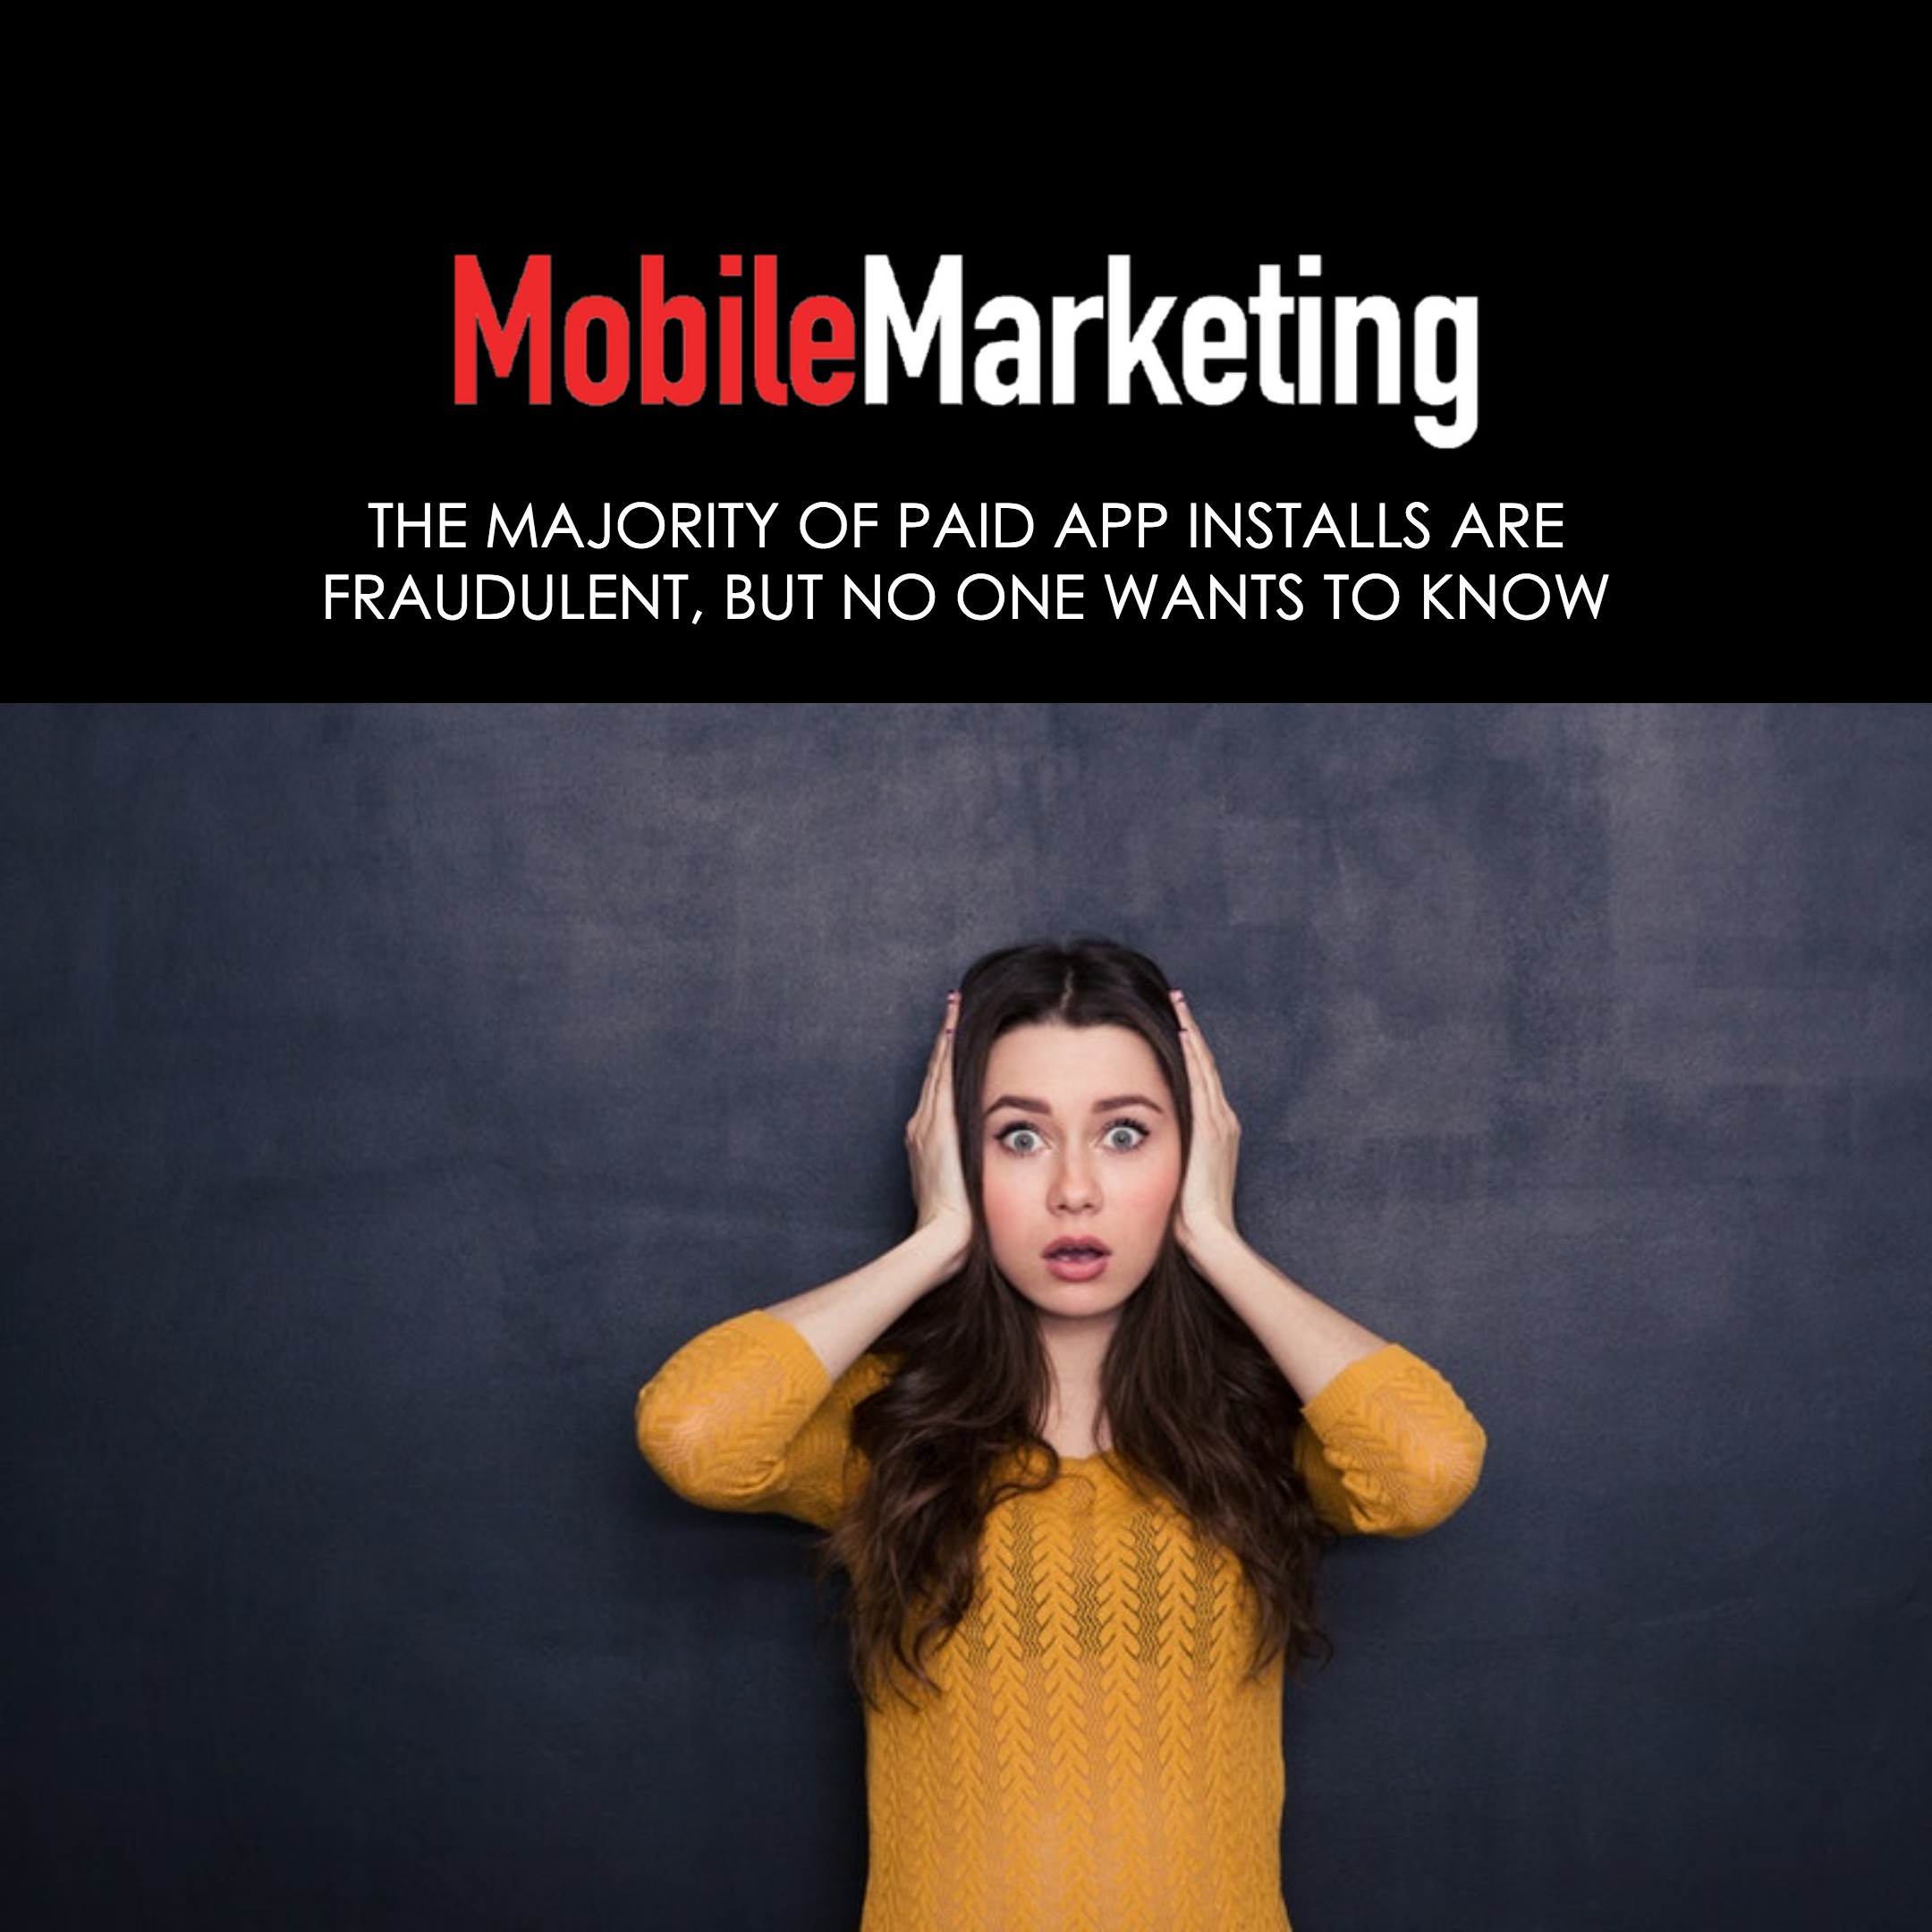 Blog+4+Square+Image+Mobile+Marketing